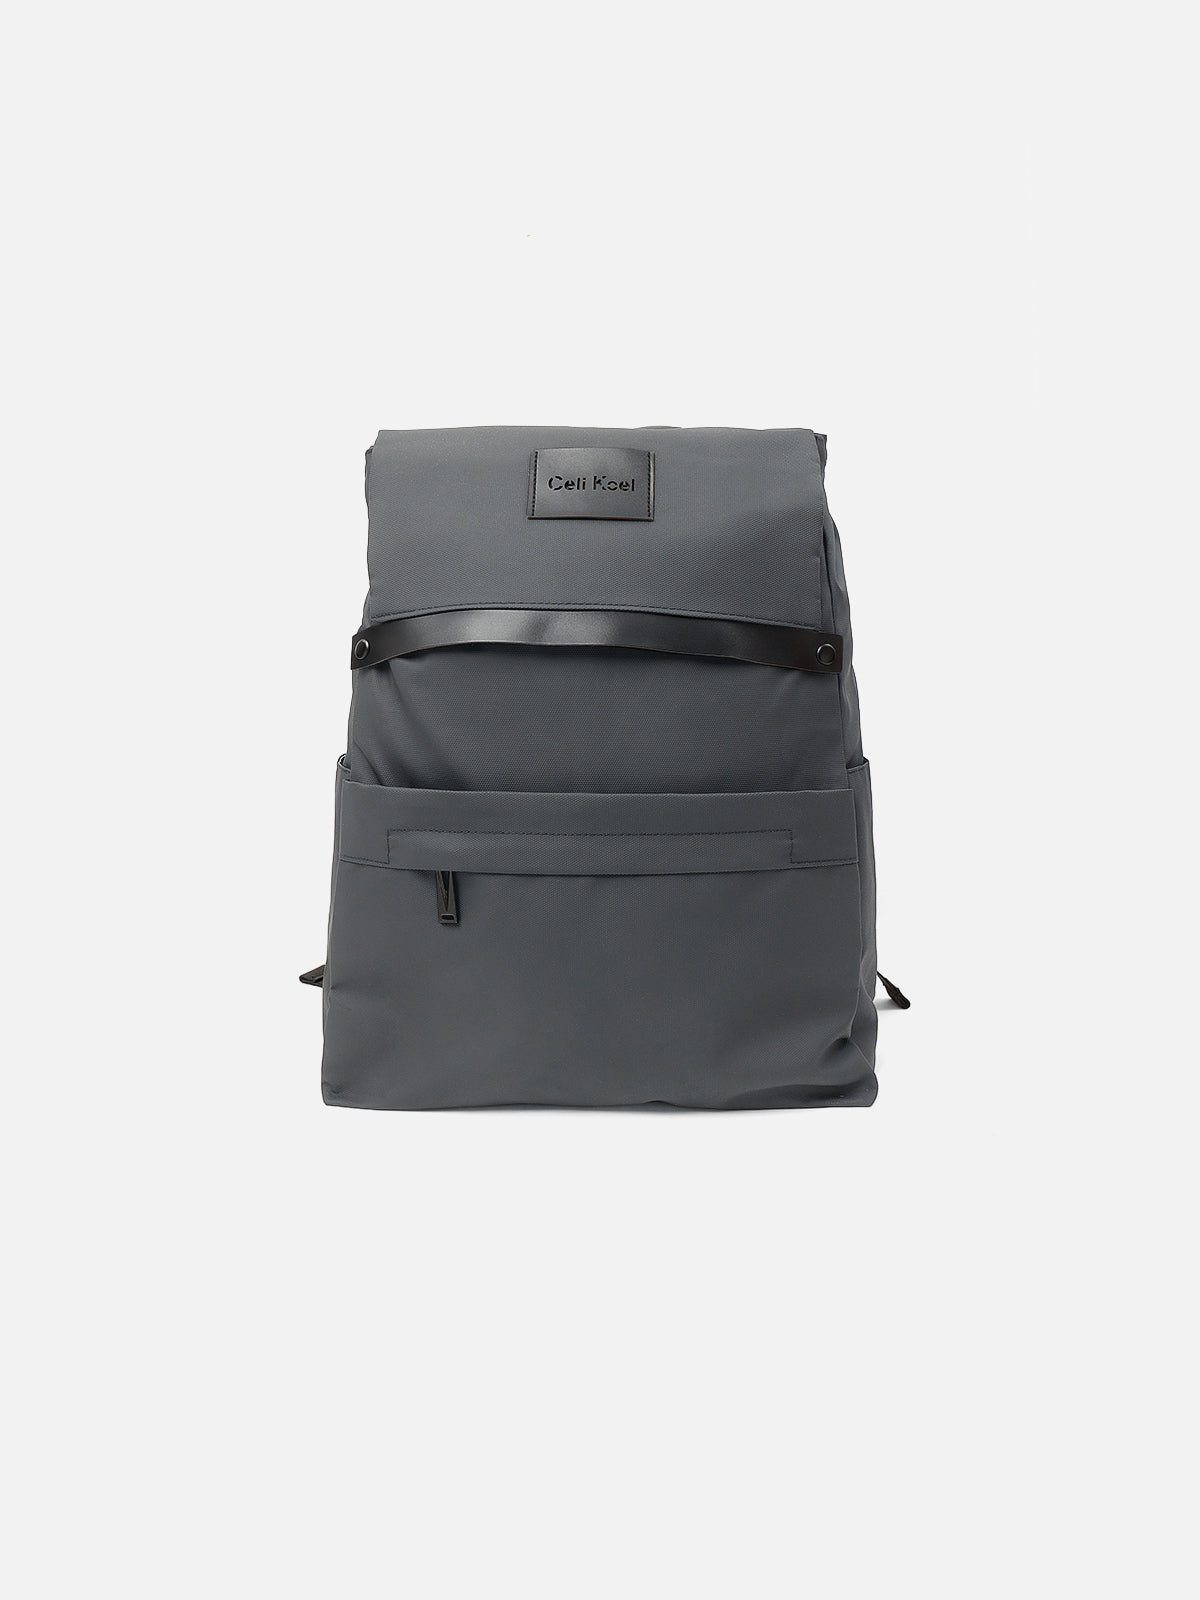 Grey Backpack - FABG24-007